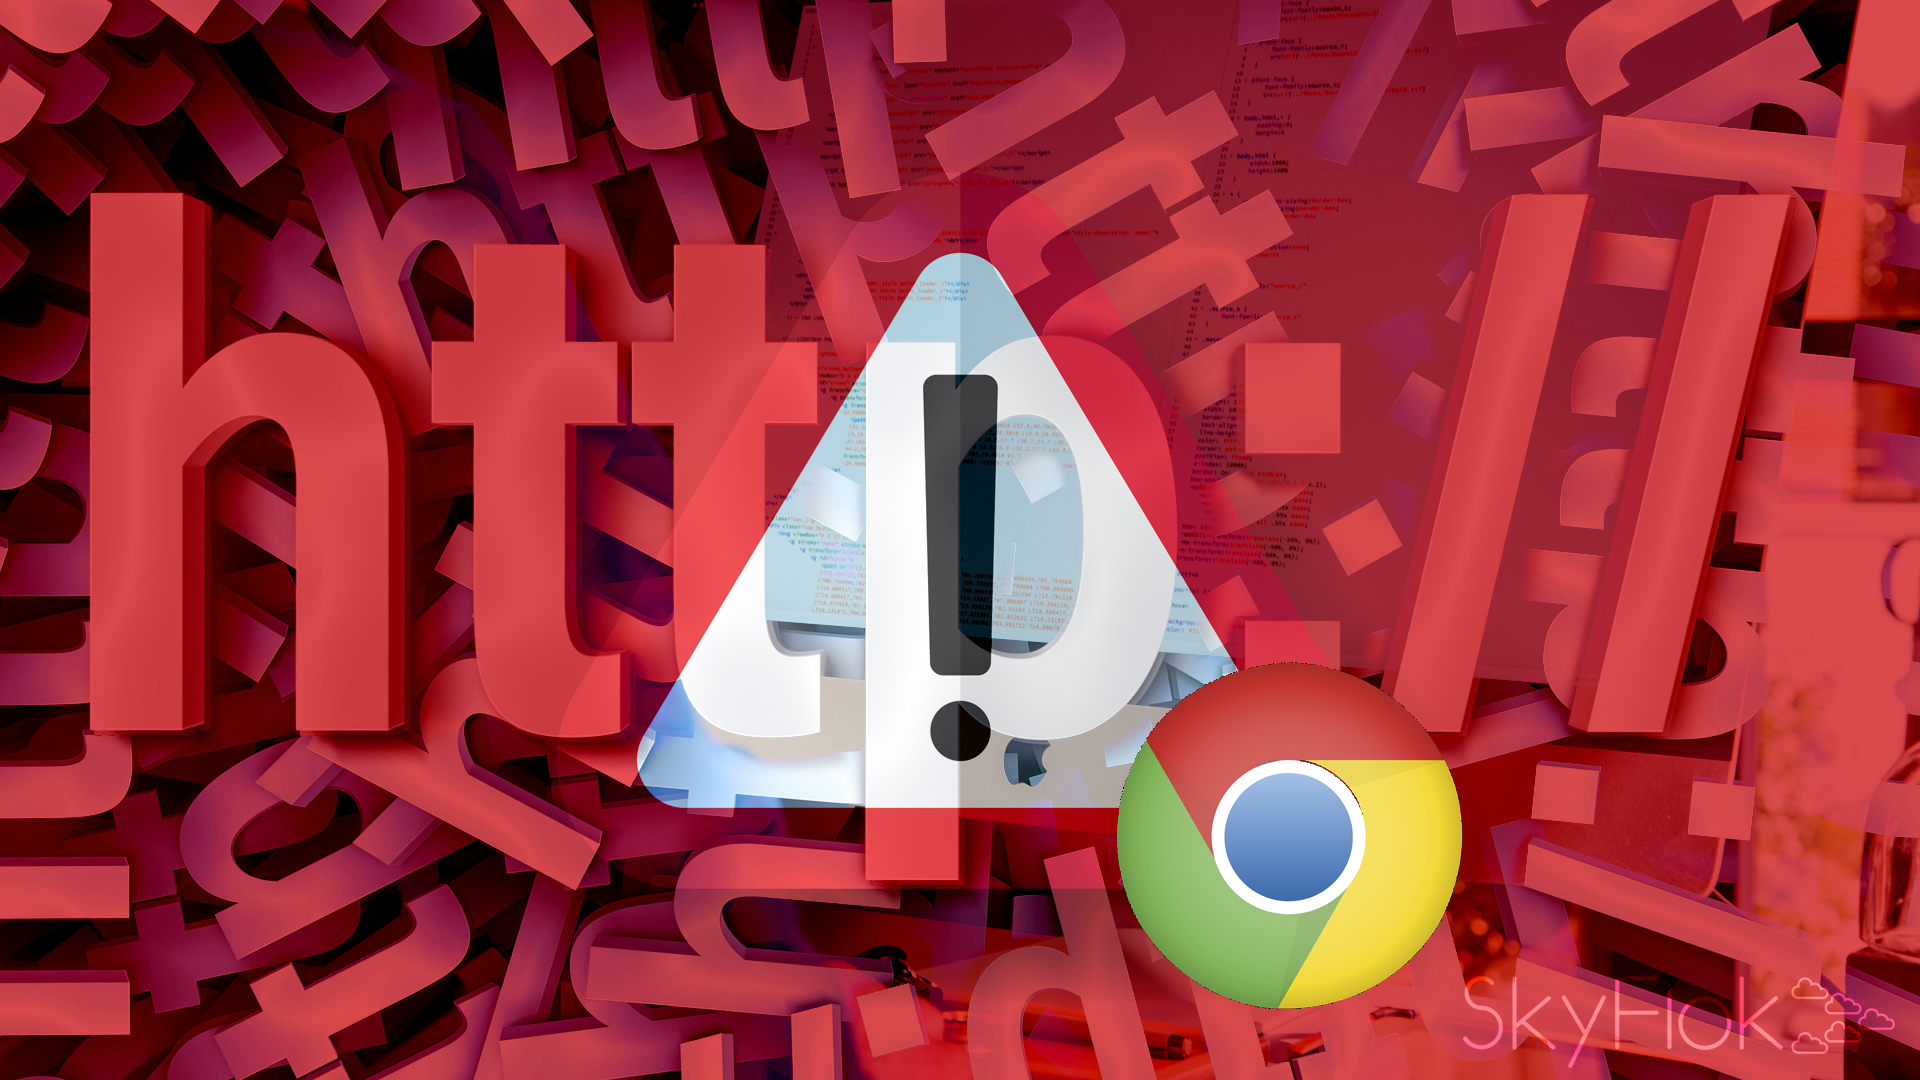 Chrome’s HTTP warning seeks to cut web surveillance, tampering